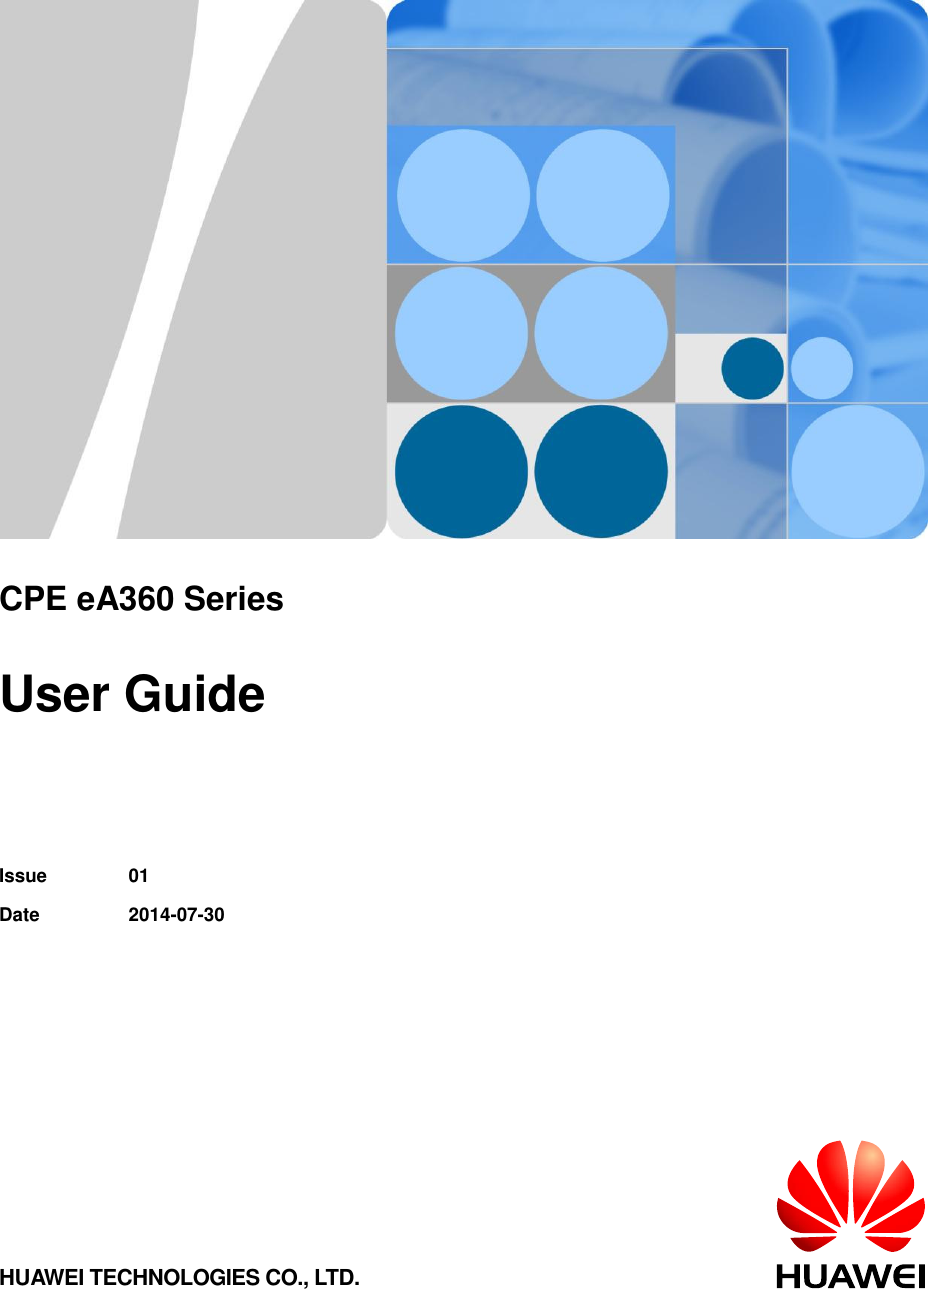         CPE eA360 Series  User Guide   Issue  01 Date  2014-07-30 HUAWEI TECHNOLOGIES CO., LTD. 